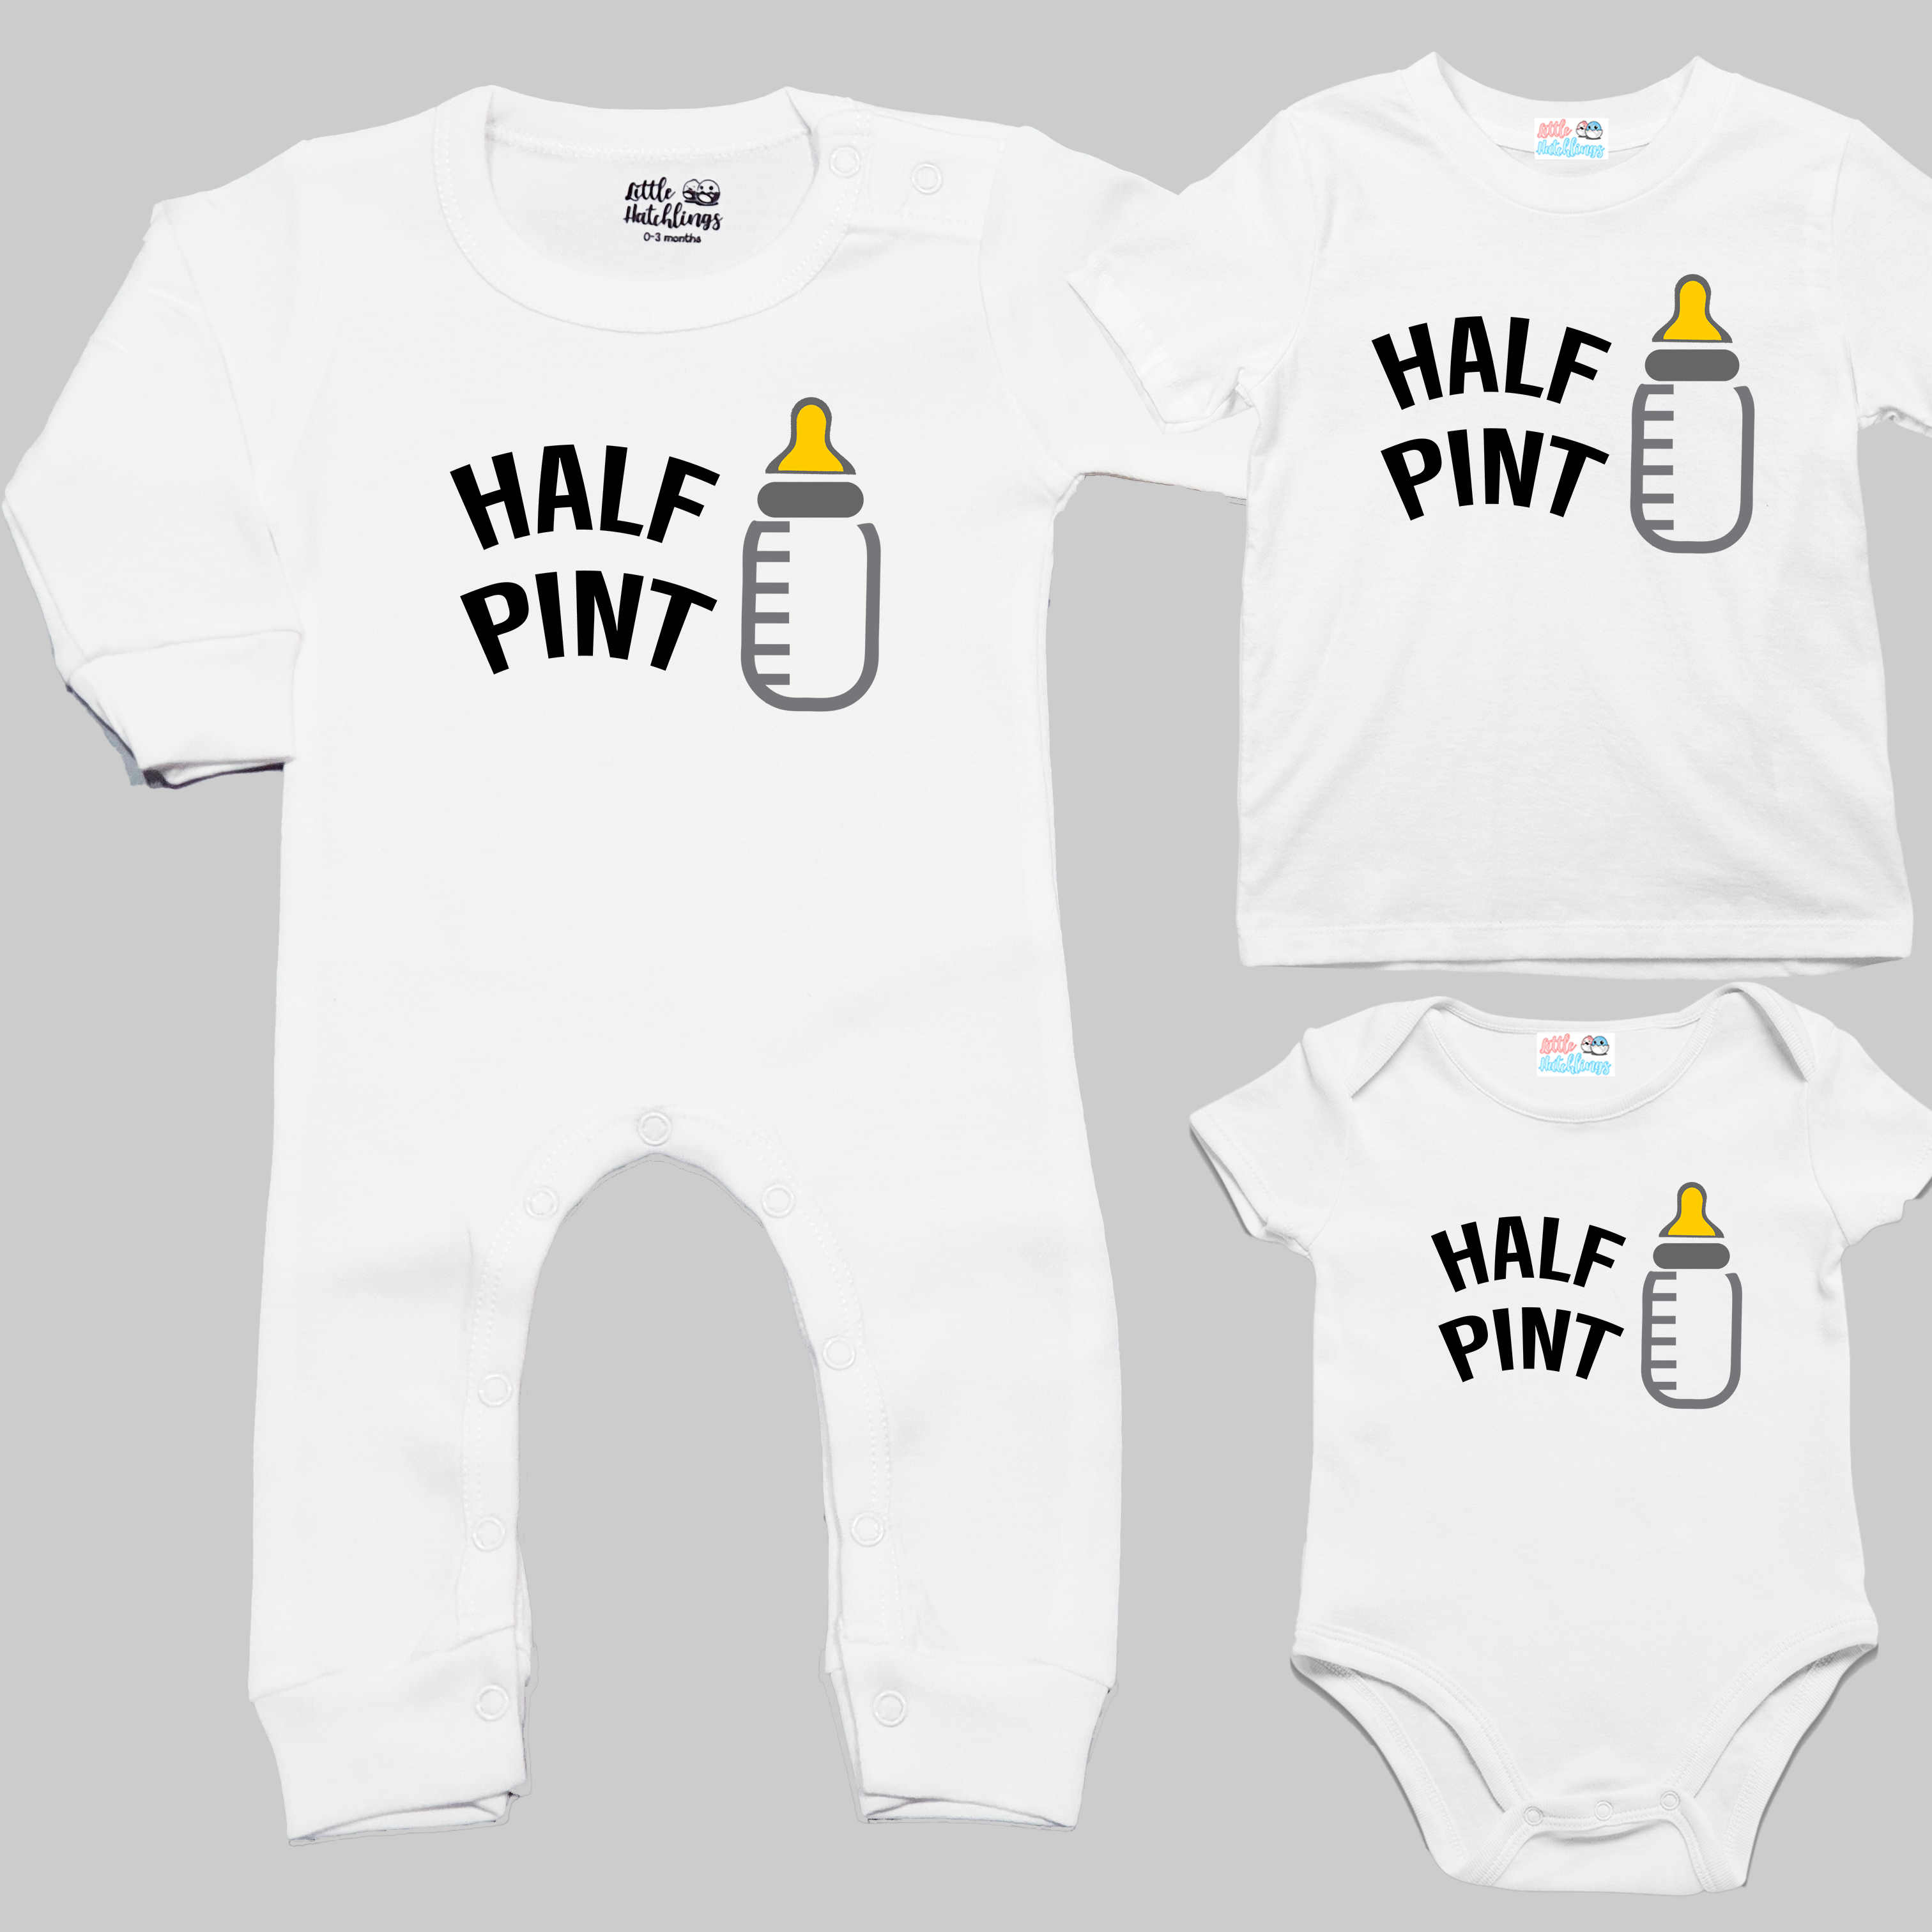 Pint + Half Pint White And Grey Combo (Milk Bottle & Beer Mug) - Adult Tshirt + Kids Tshirt